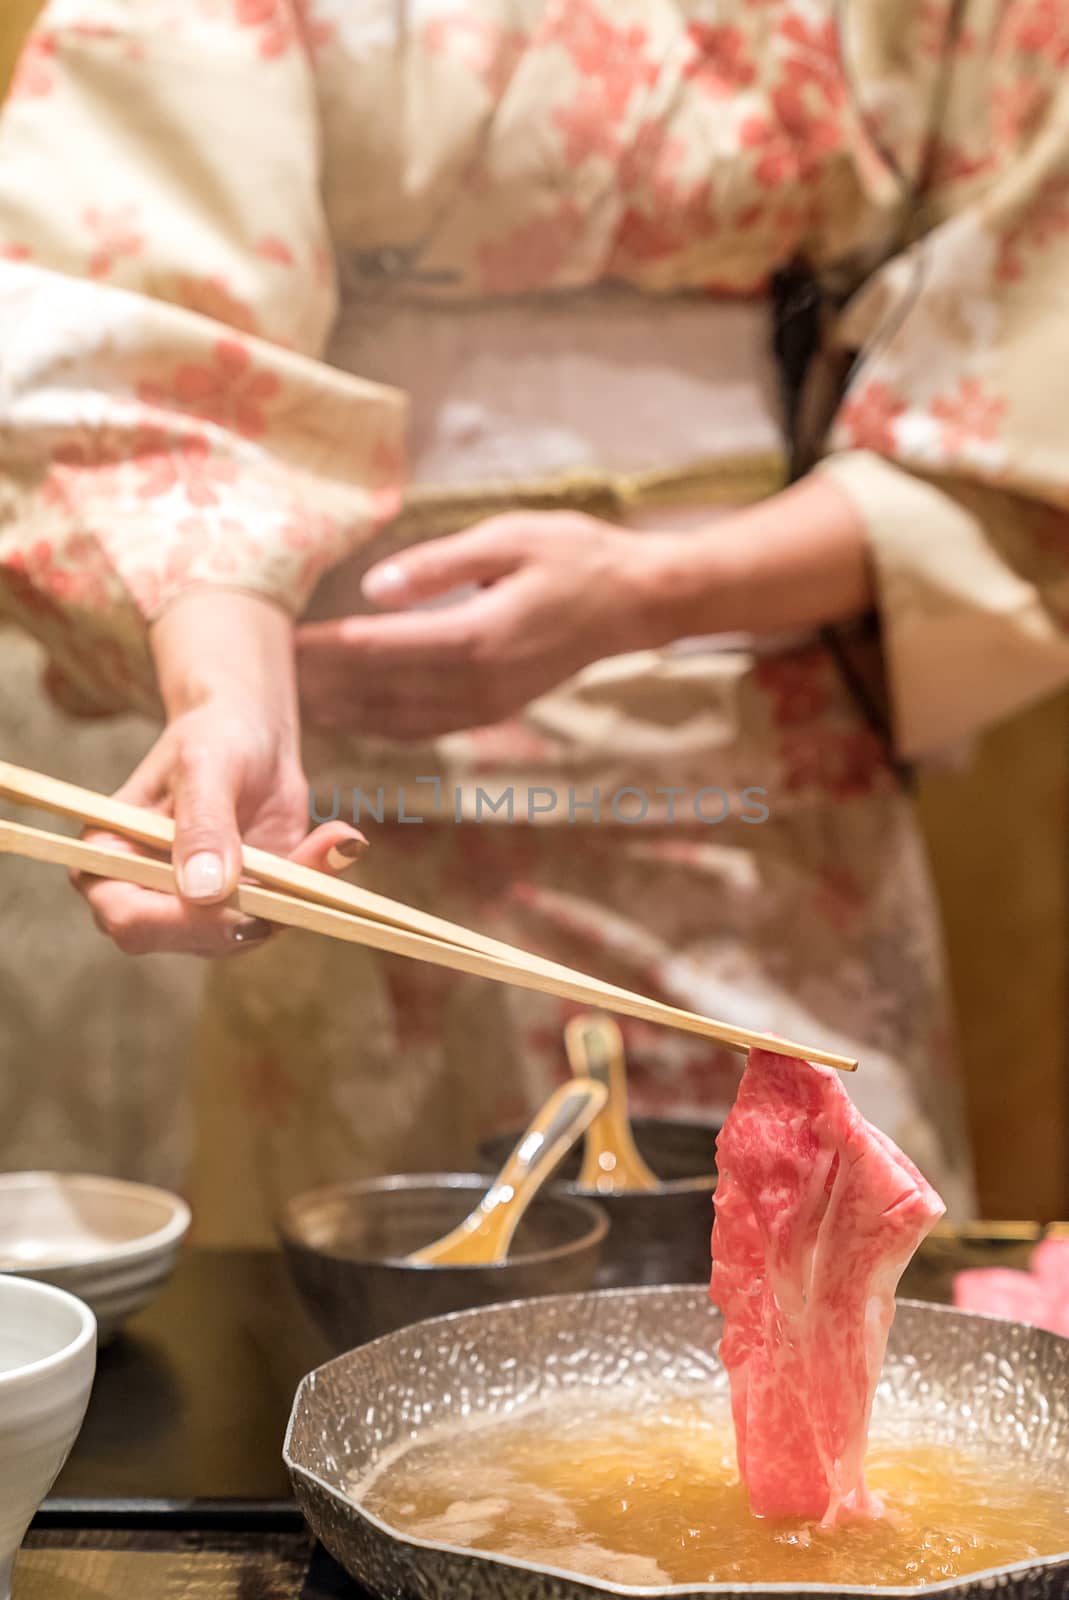 matsusaka beef A5 Wagyu Beef Shabu shabu with steam, Groumet Japanese hot pot cuisine